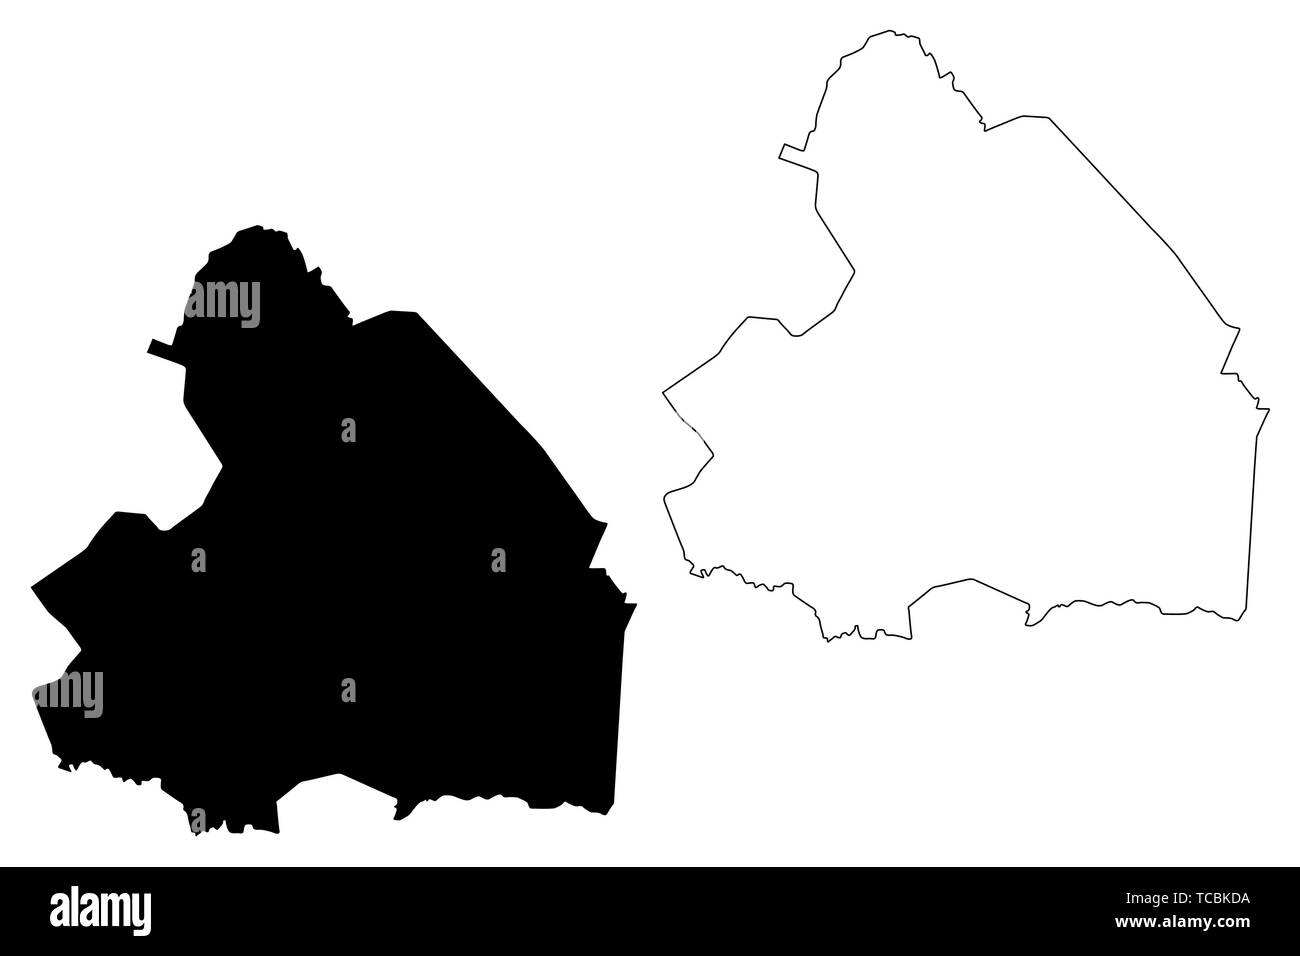 Provinz Drenthe (Königreich der Niederlande, Holland) Karte Vektor-illustration, kritzeln Skizze Drenthe Karte Stock Vektor